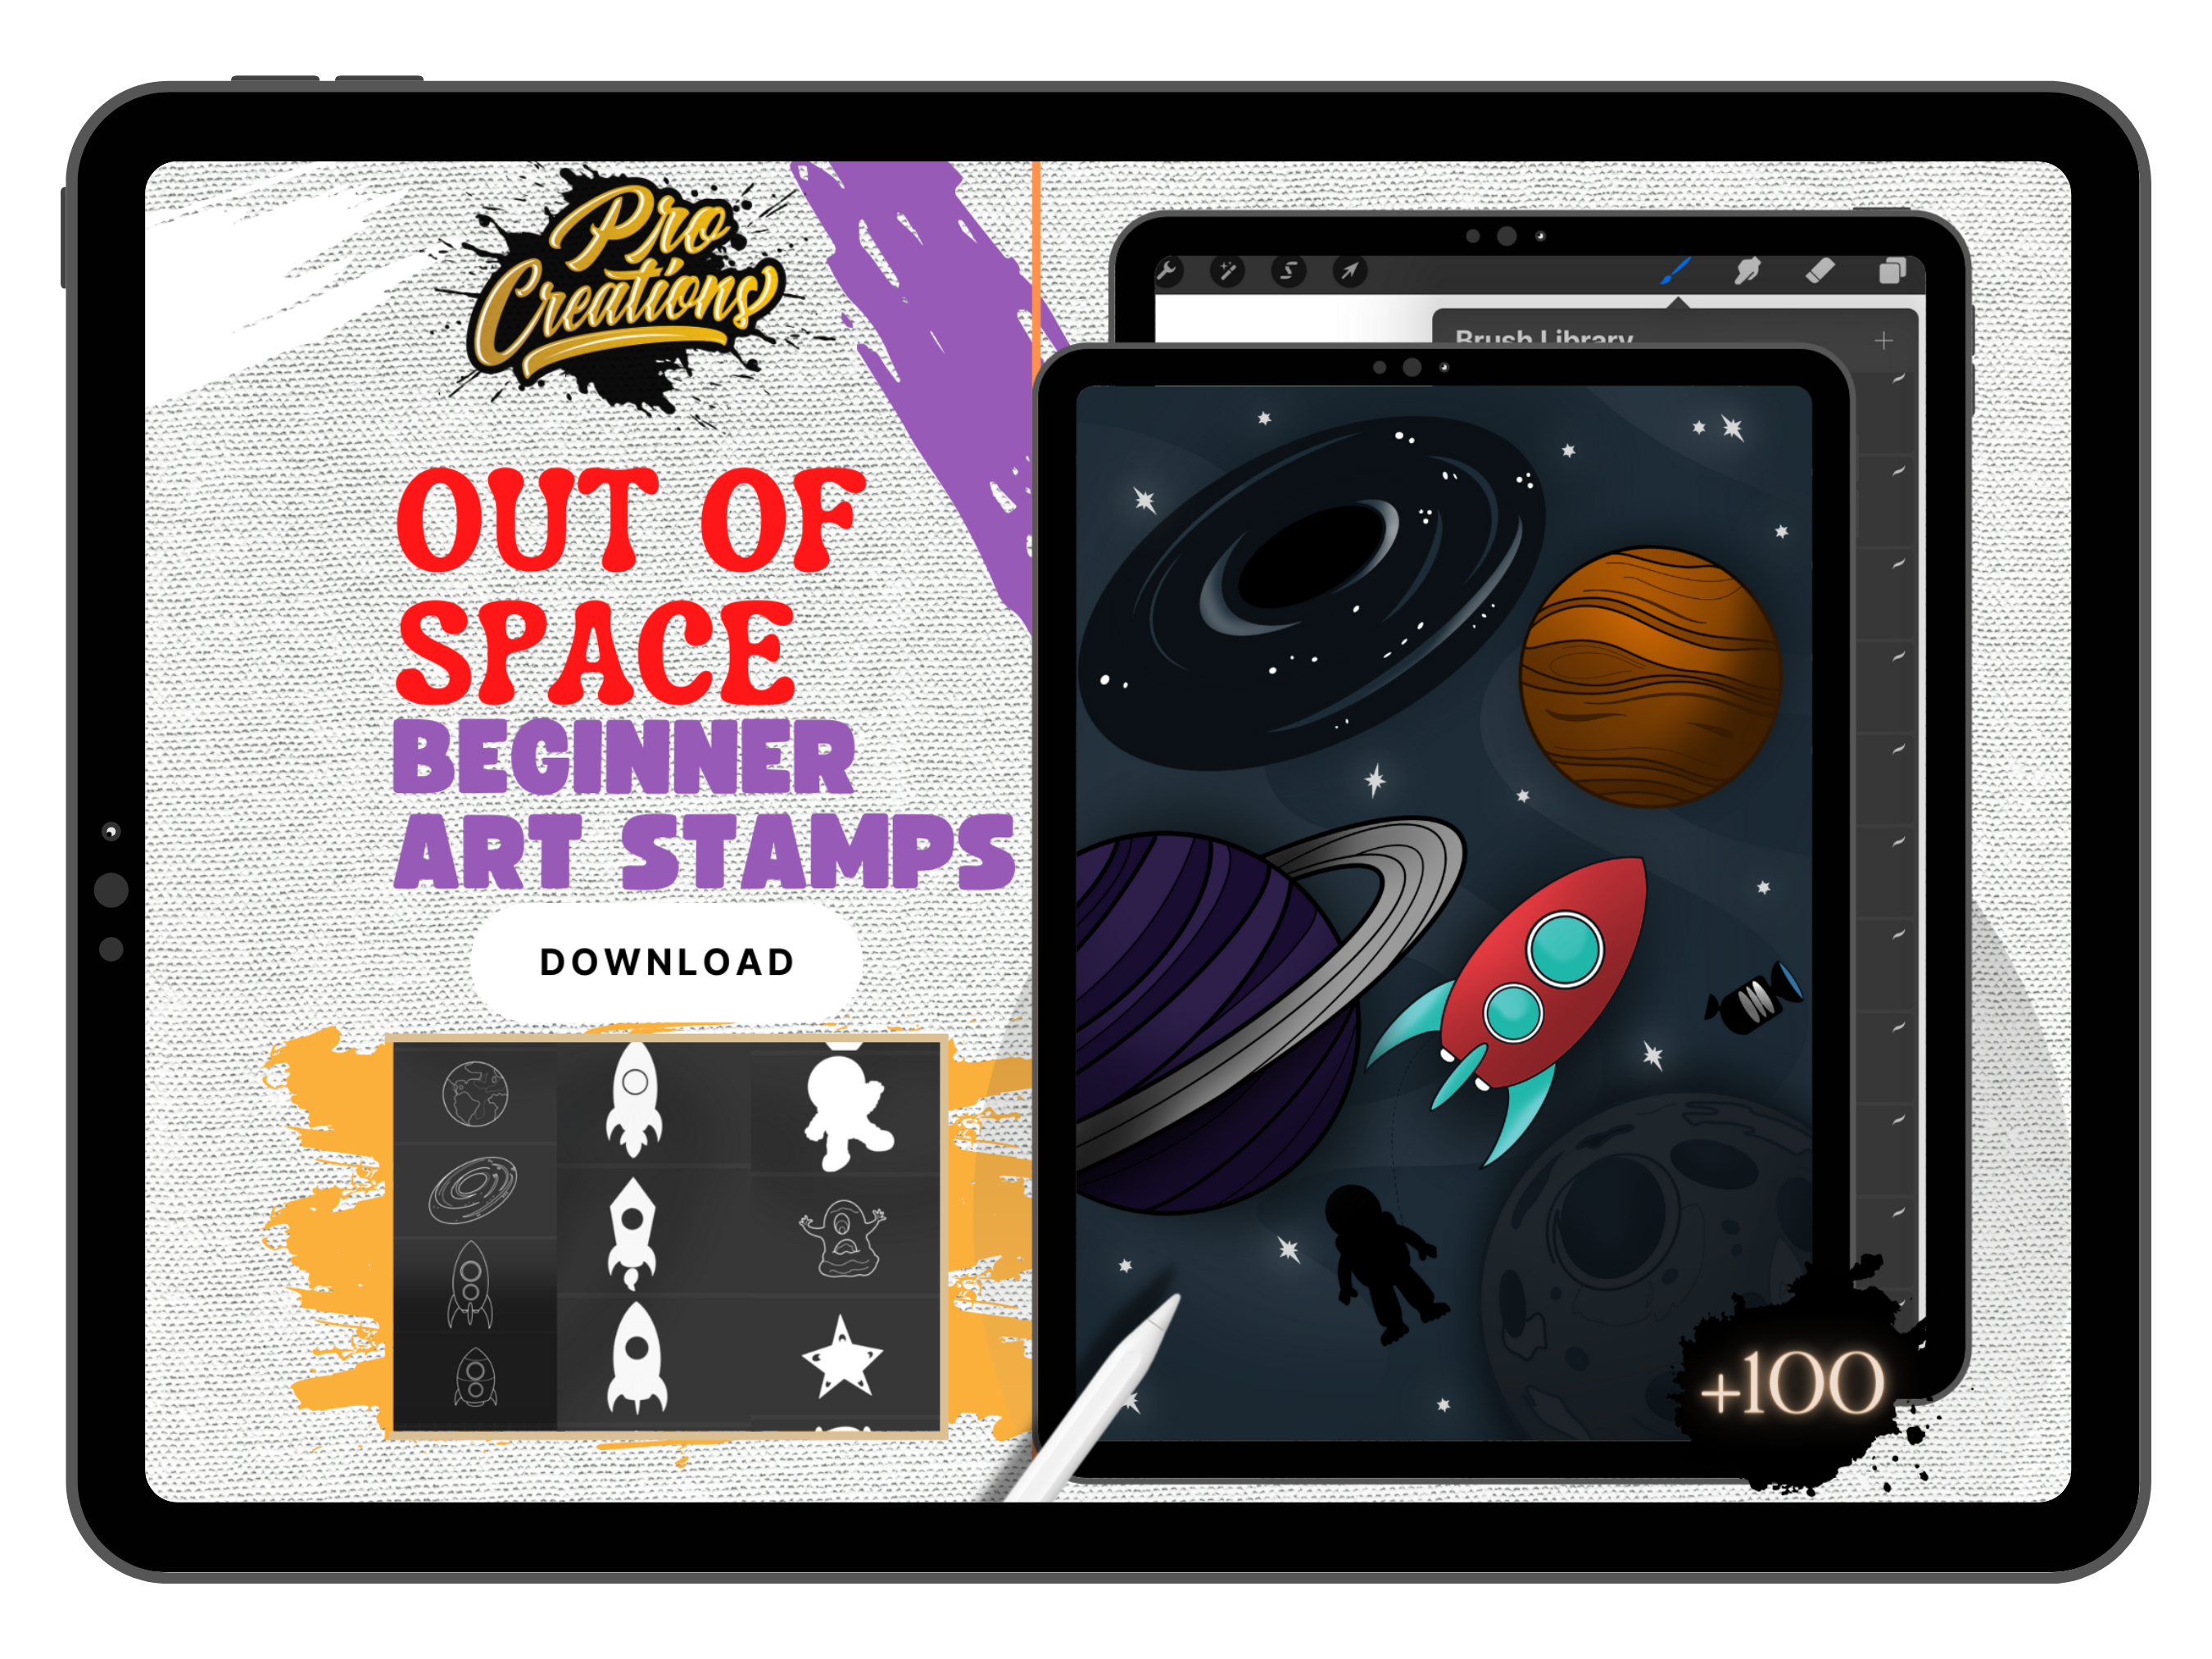 100 sellos de pincel de forma espacial | Juegos de pinceles Pro-Create descargables